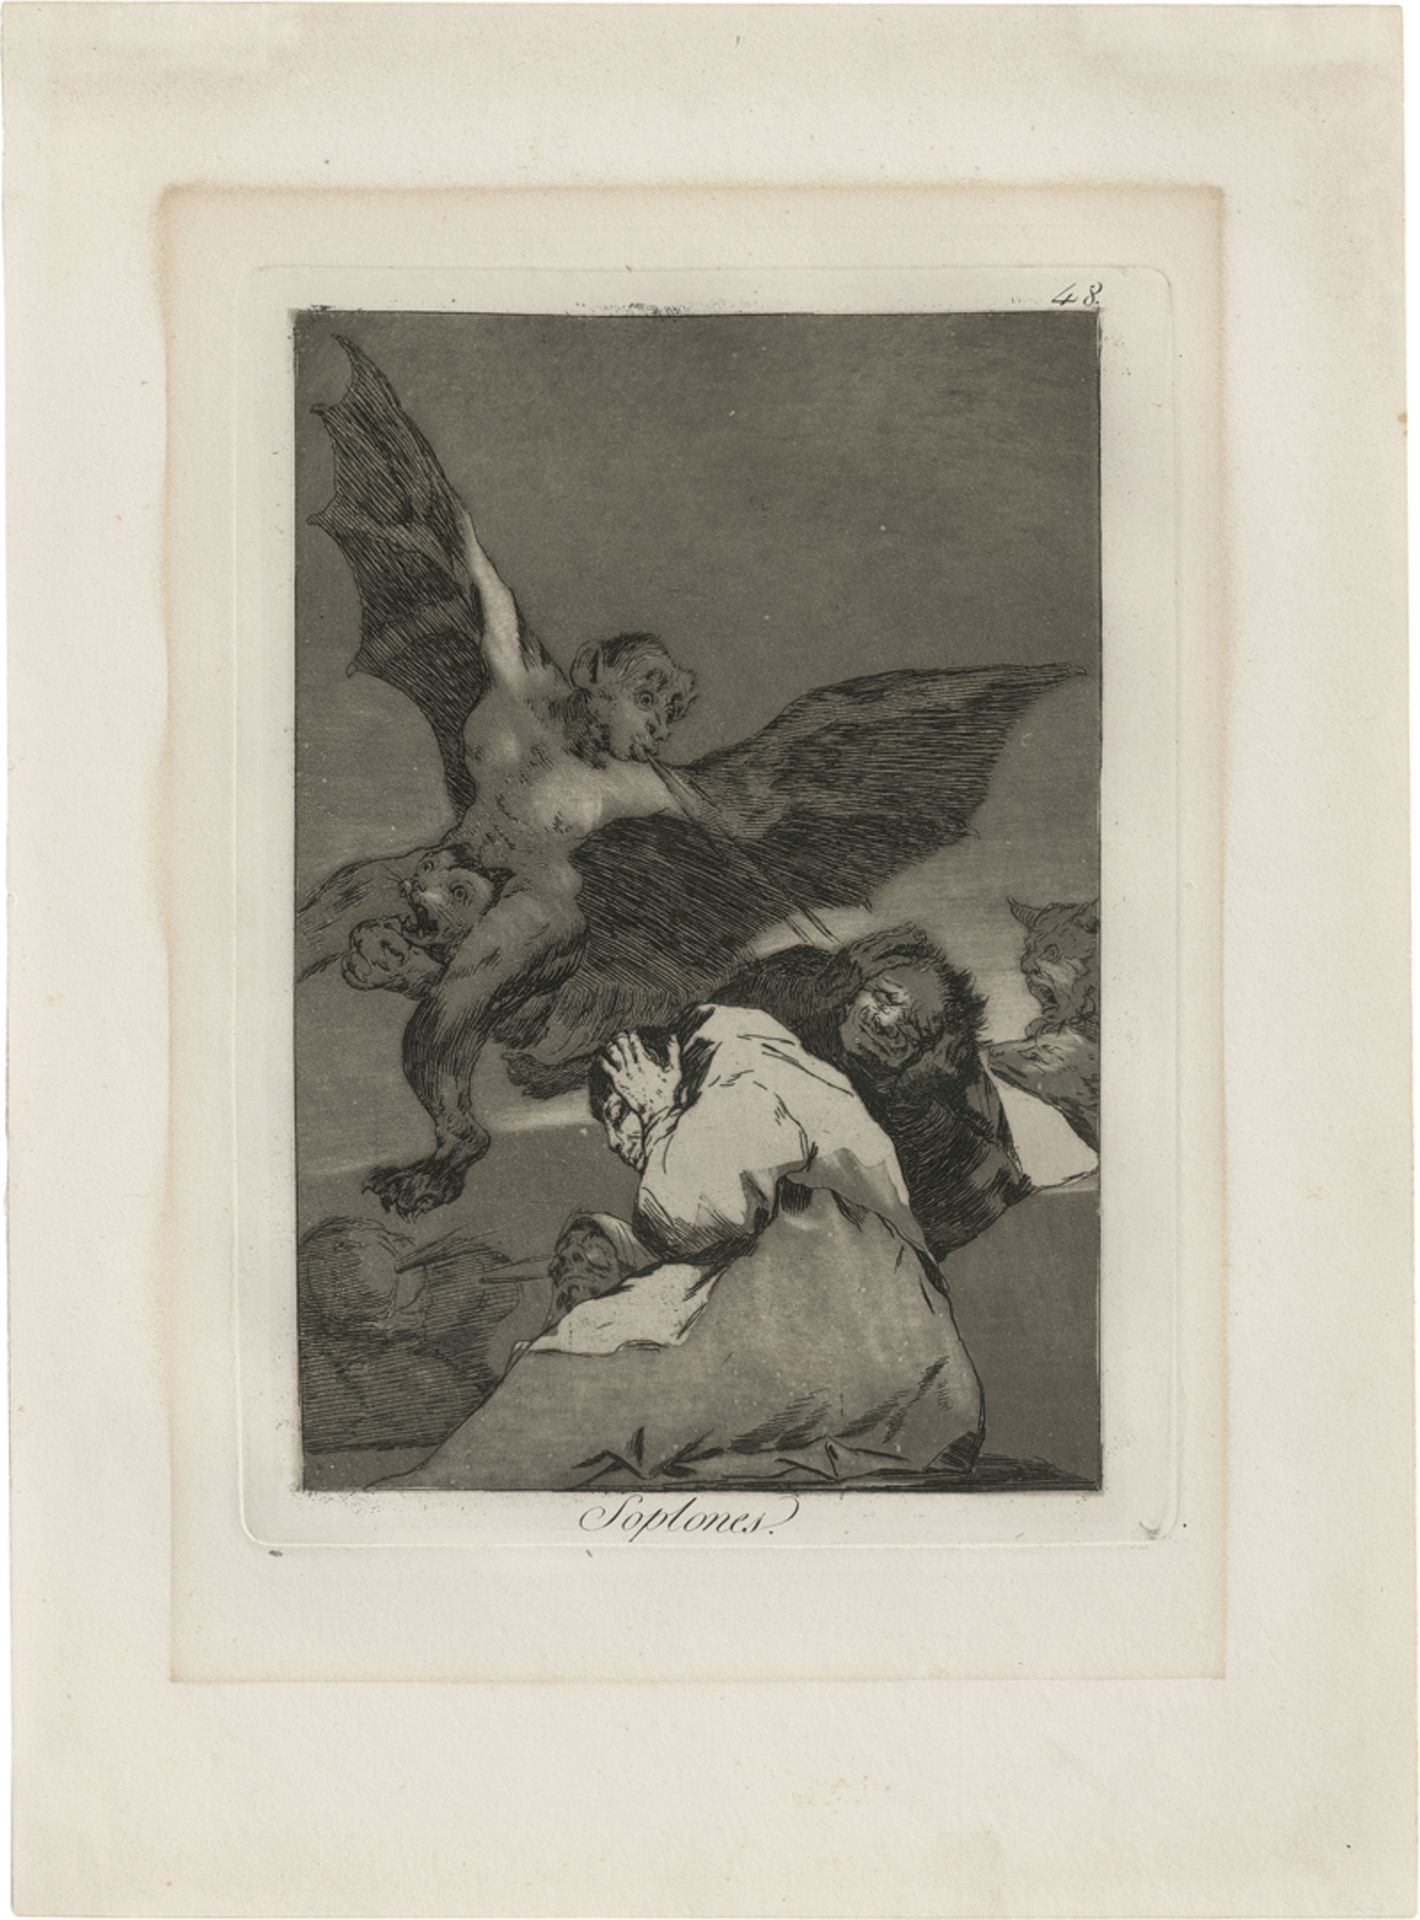 Goya, Francisco de: Soplones - Image 2 of 2